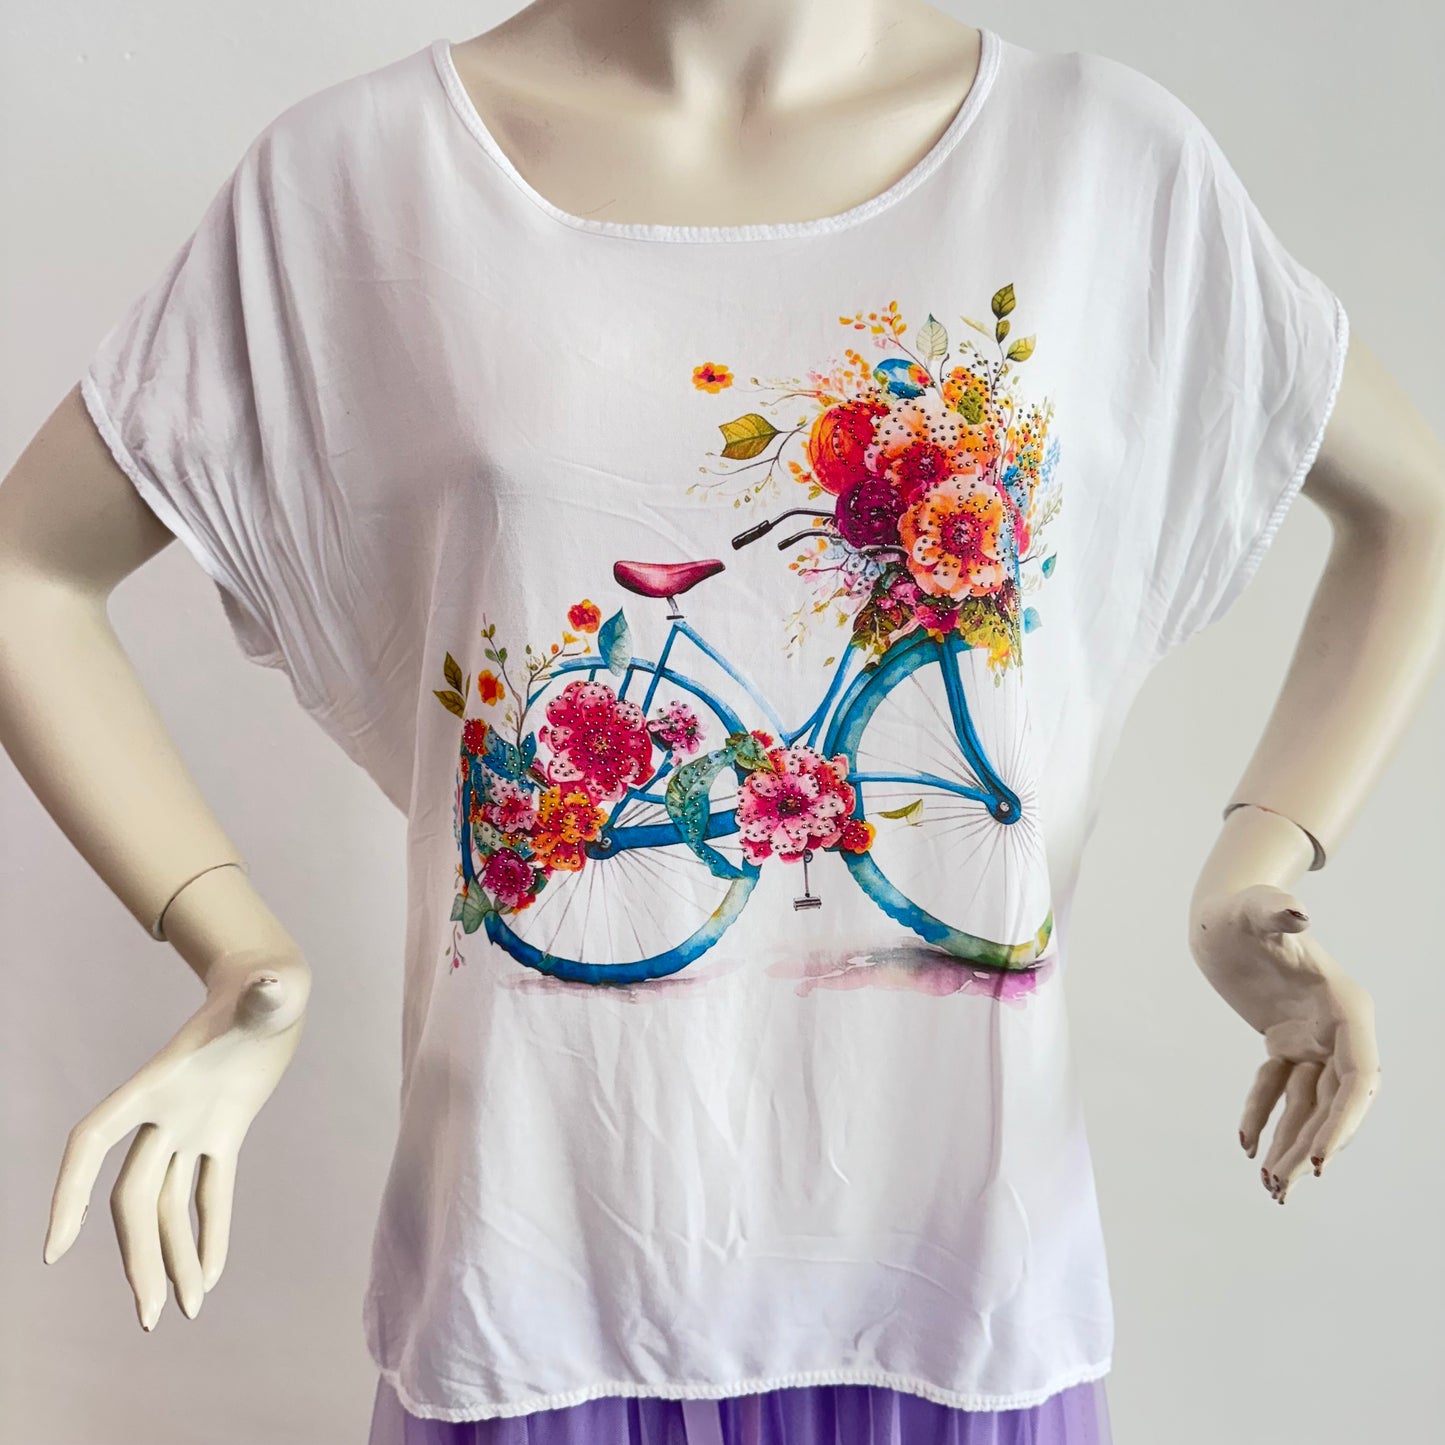 Luftiges Sommer-Shirt mit Fahrrad-Print